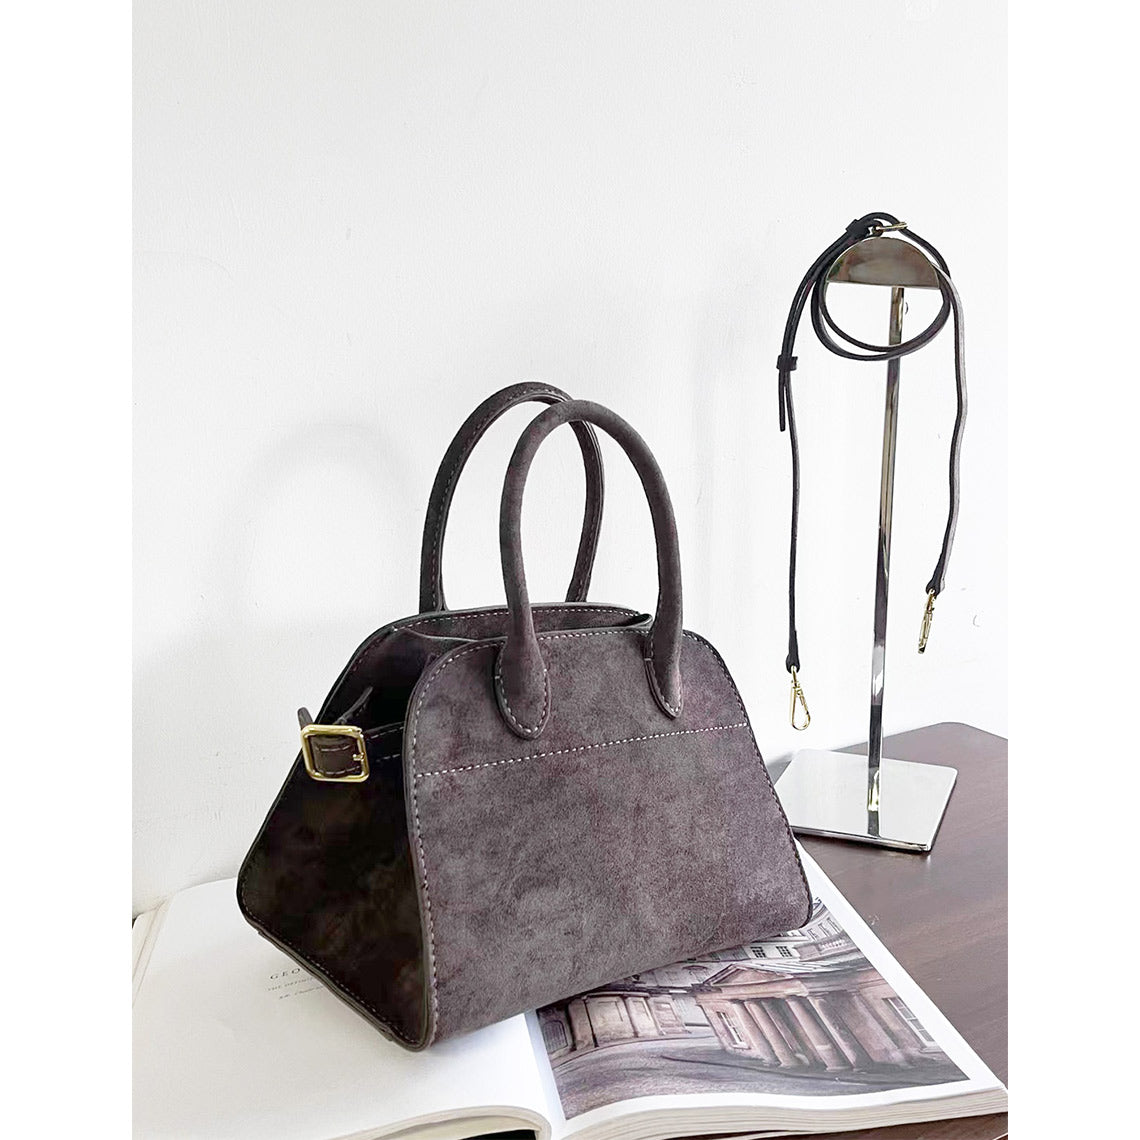 Leather Inspired Row Handbag DIY Kits